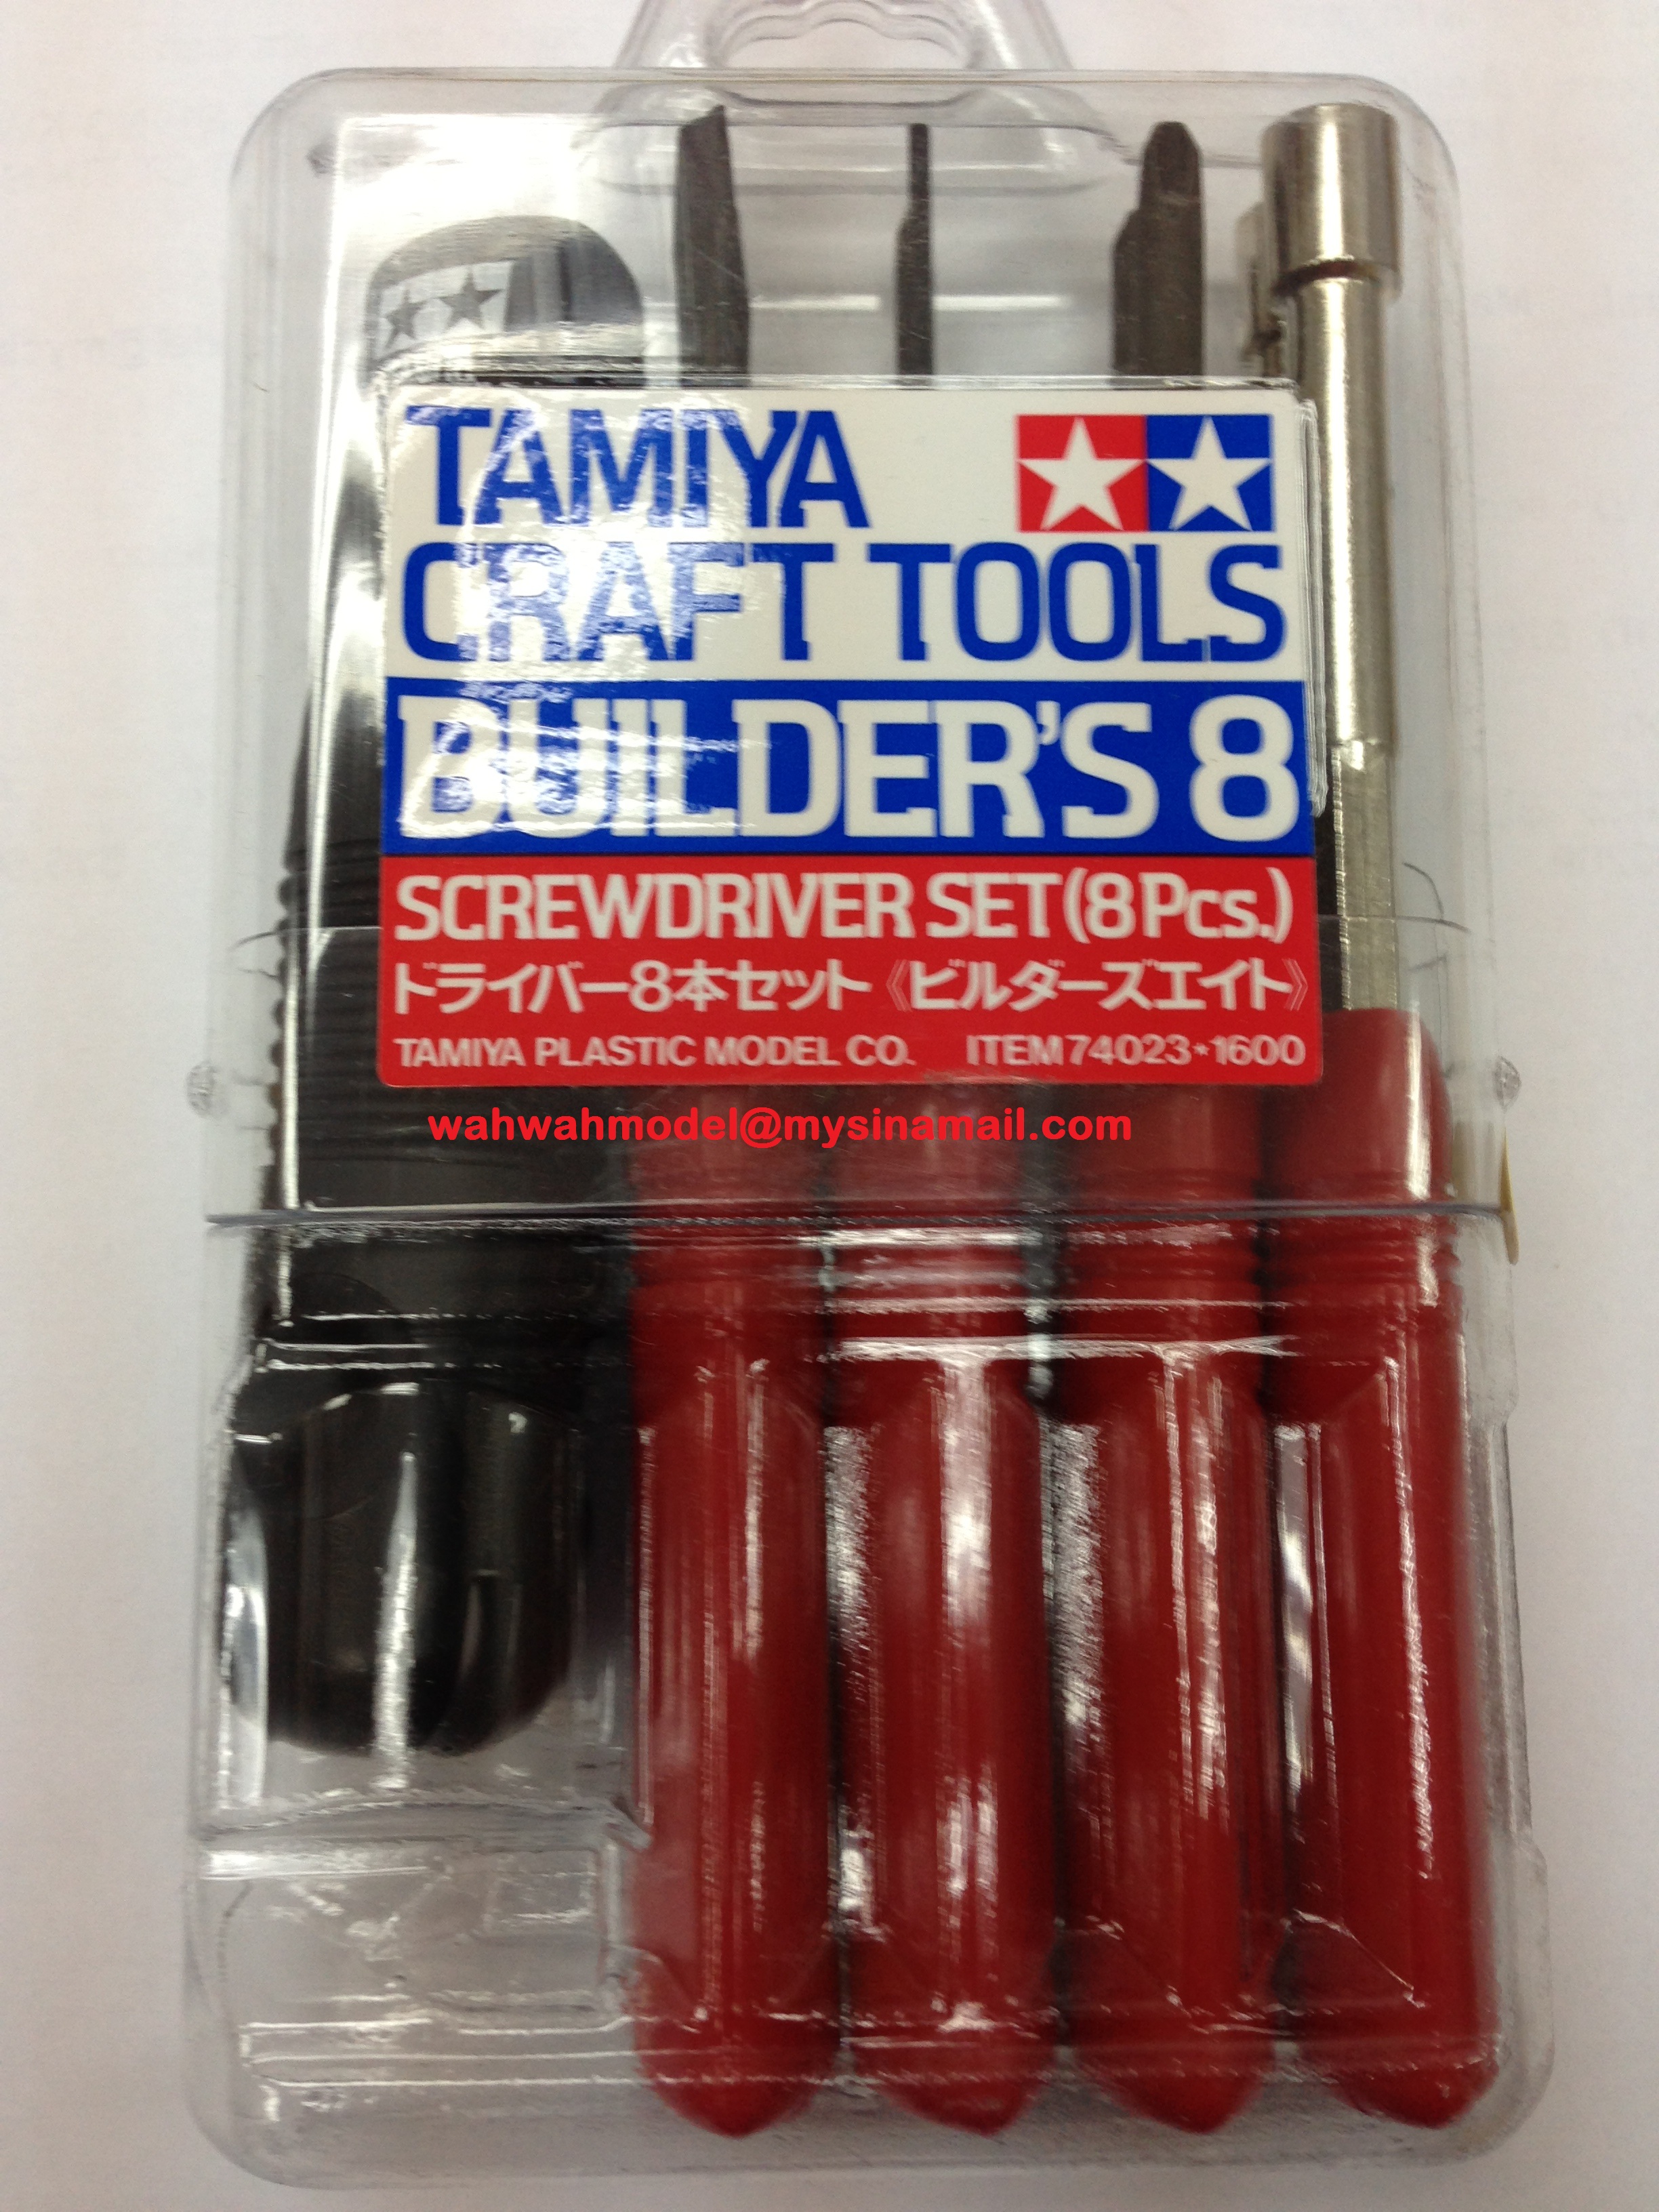 Tamiya 74023 “BUILDER’S 8” Screwdriver Set